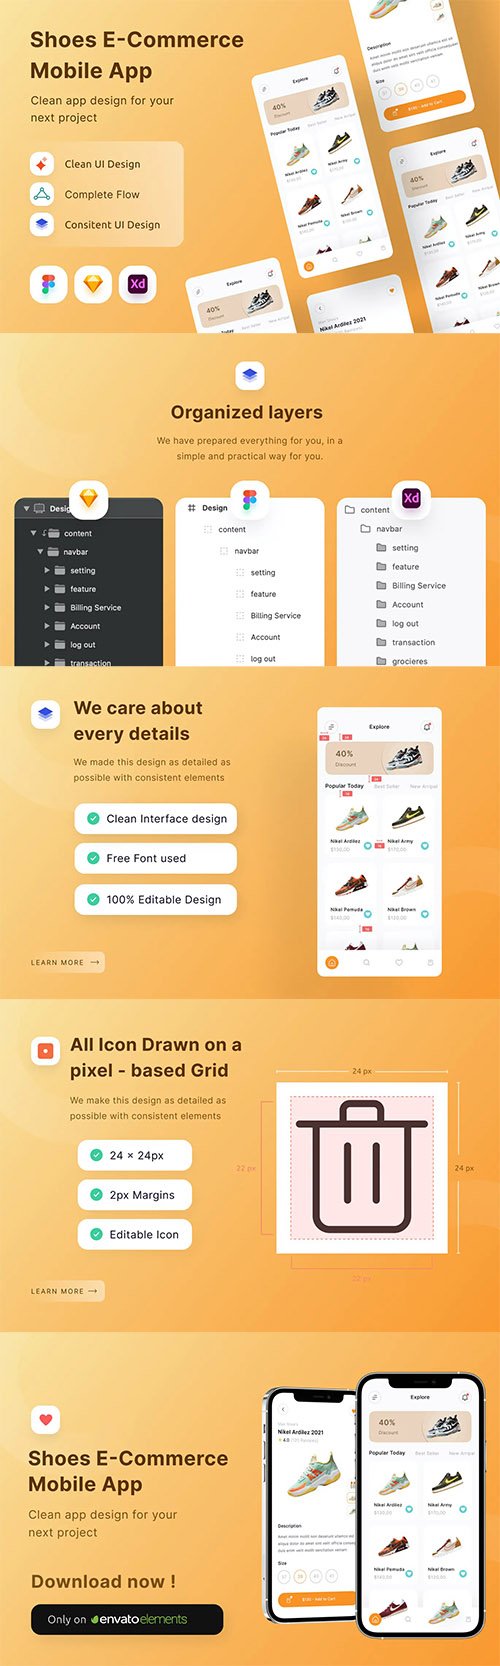 Shoes E-Commerce Mobile App